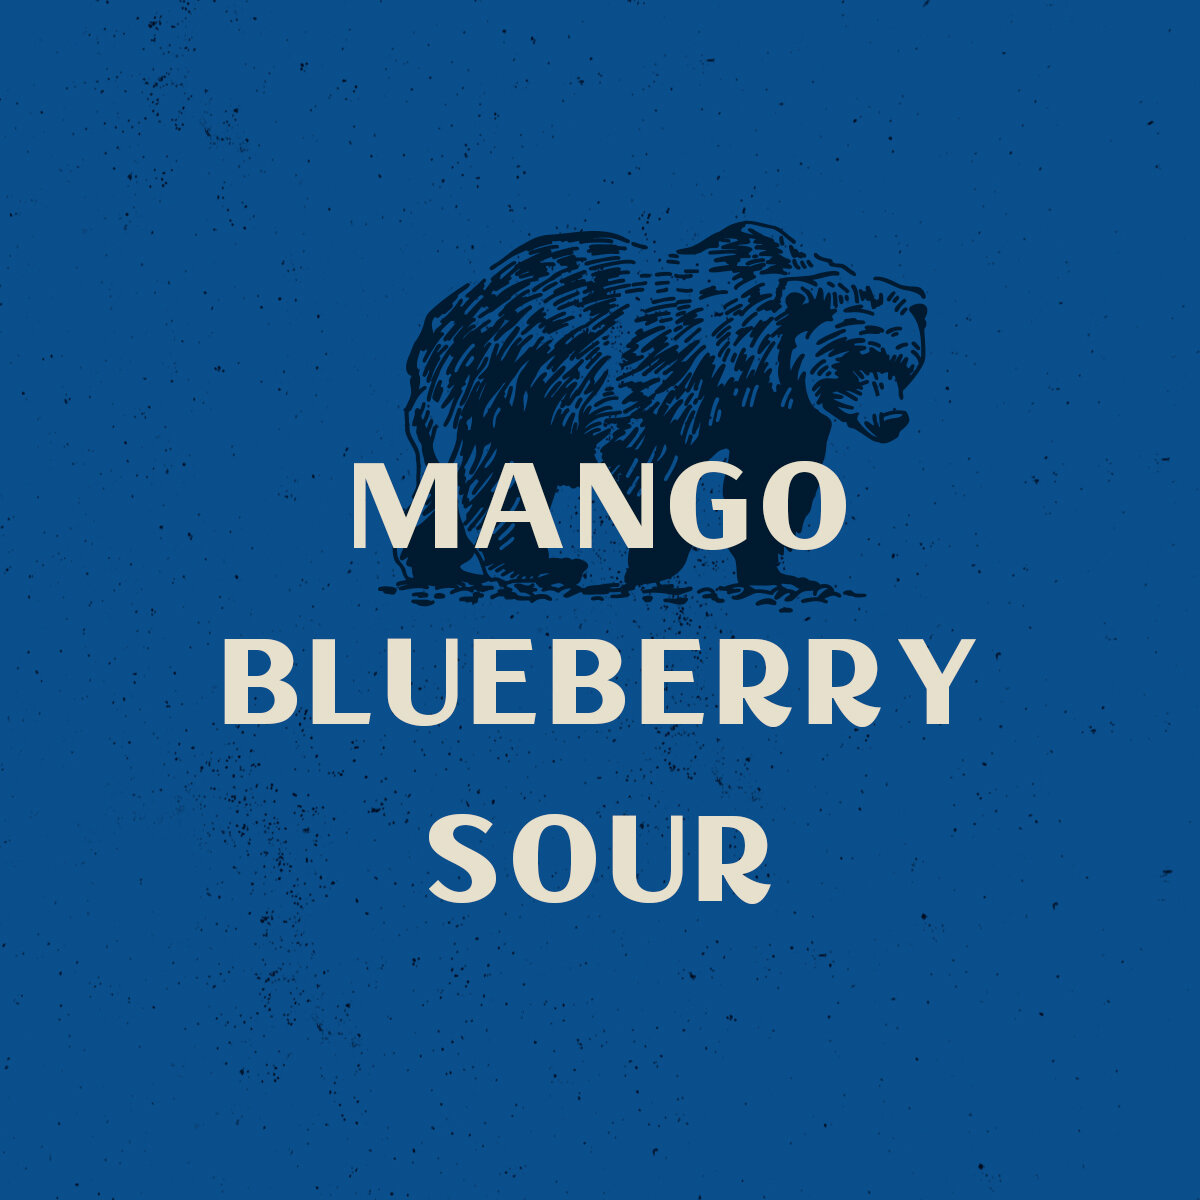 Mango Blueberry Sour